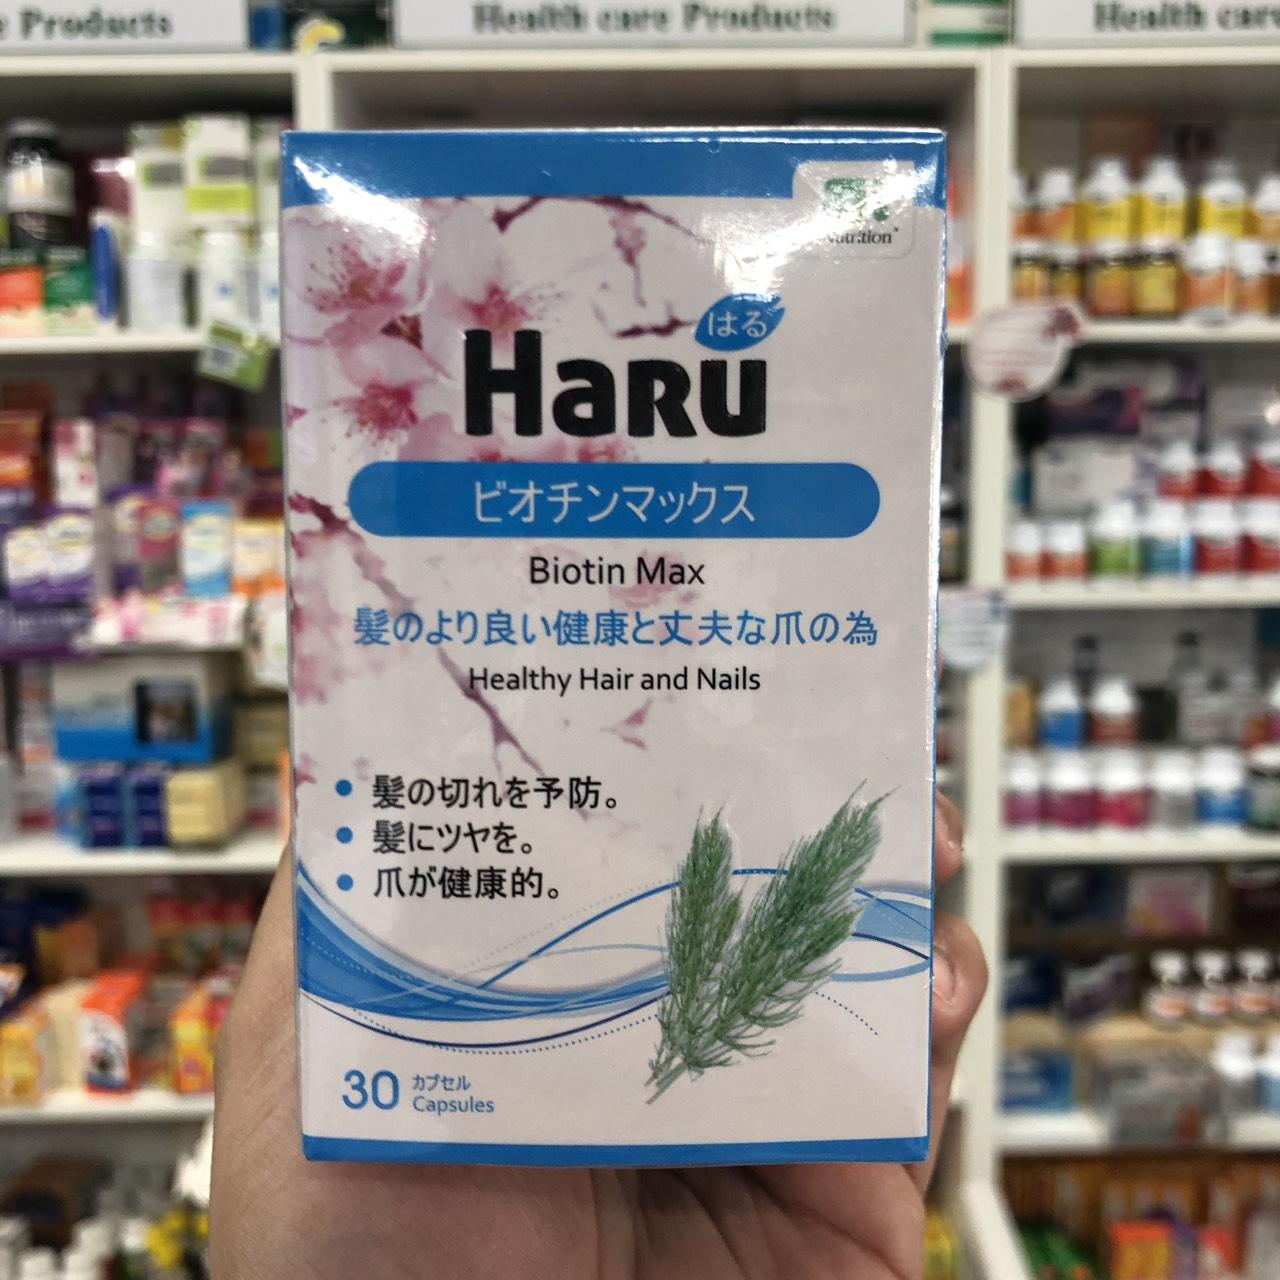 Haru Biotin Max (30 แคปซูล) 1กล่อง เพื่อสุขภาพผมที่ดี และเล็บที่แข็งแรง